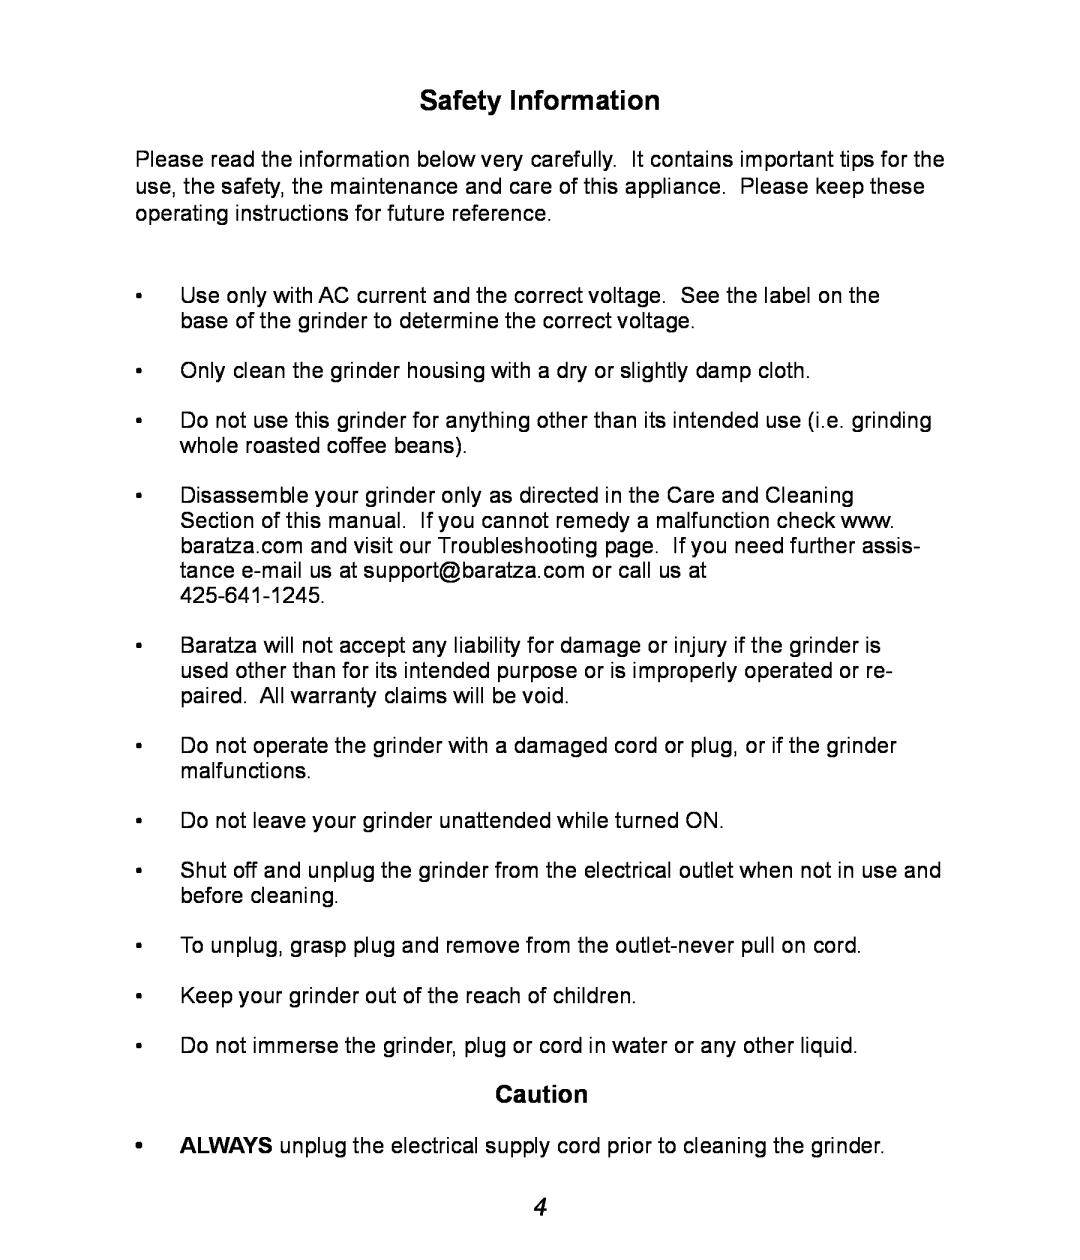 Baratza G385 manual Safety Information 